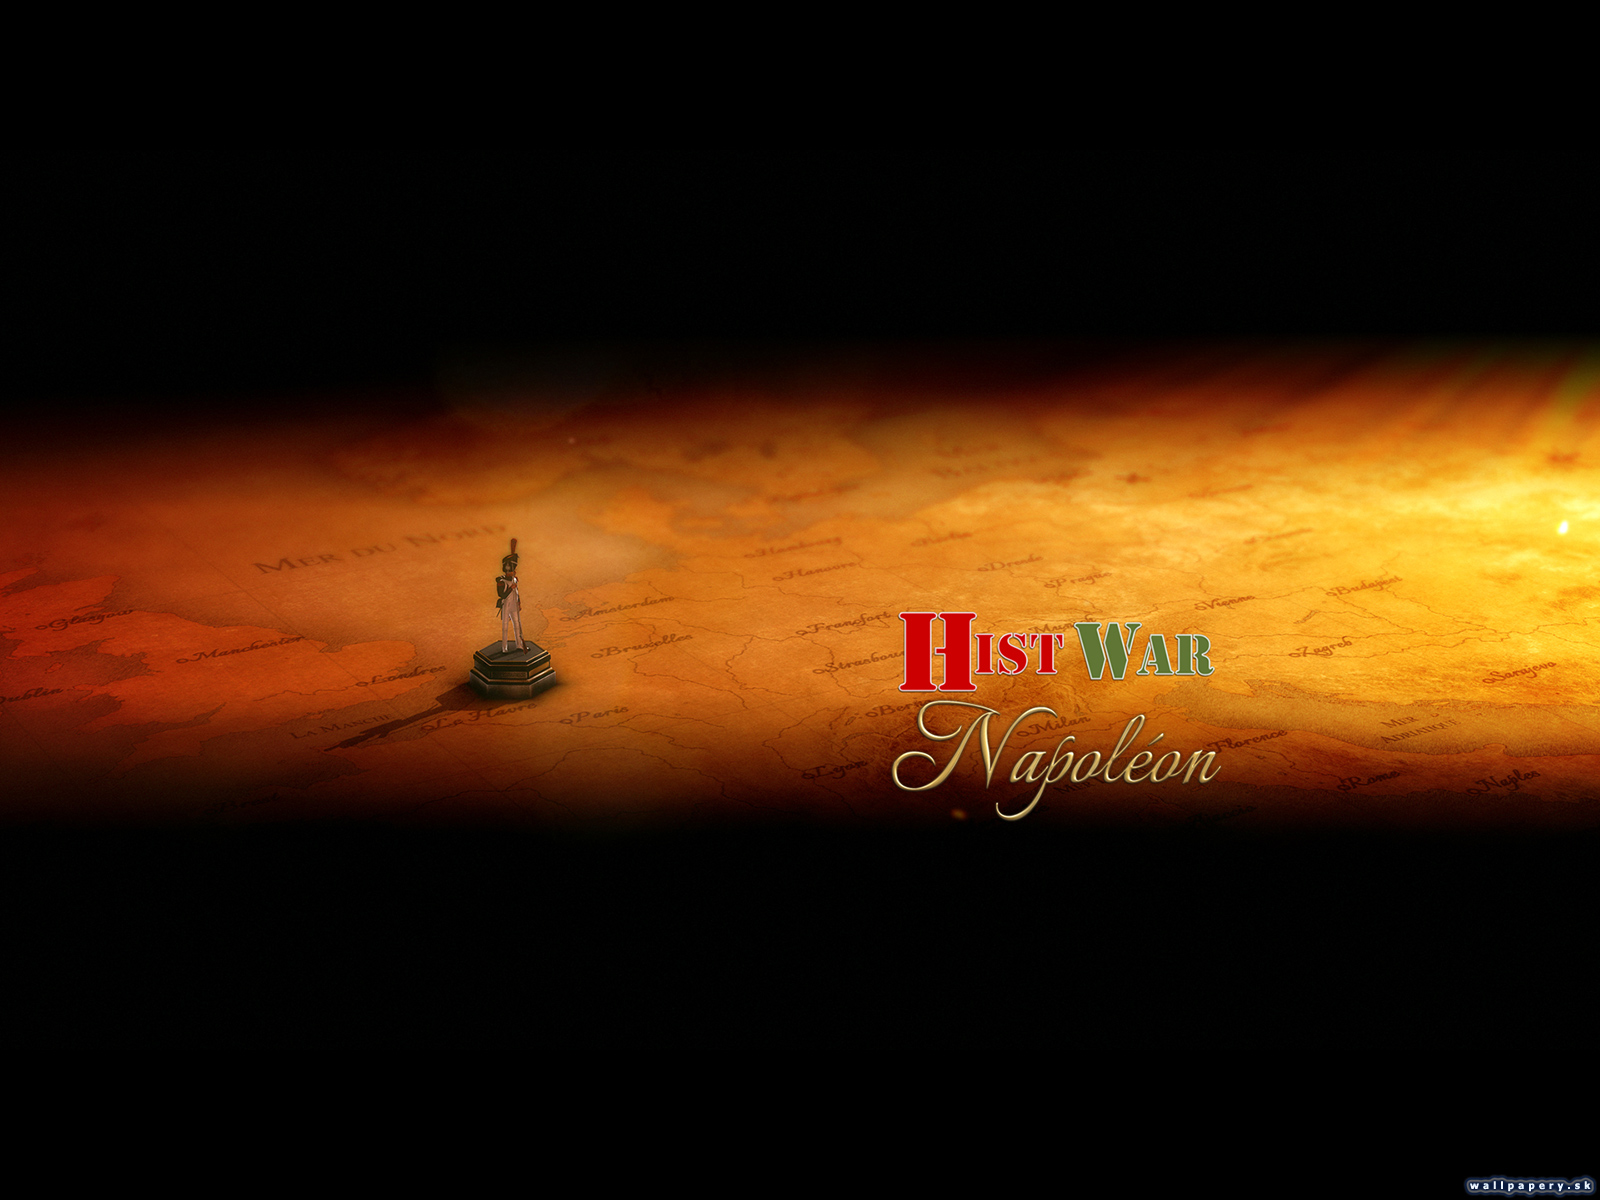 HistWar: Napolon - wallpaper 3